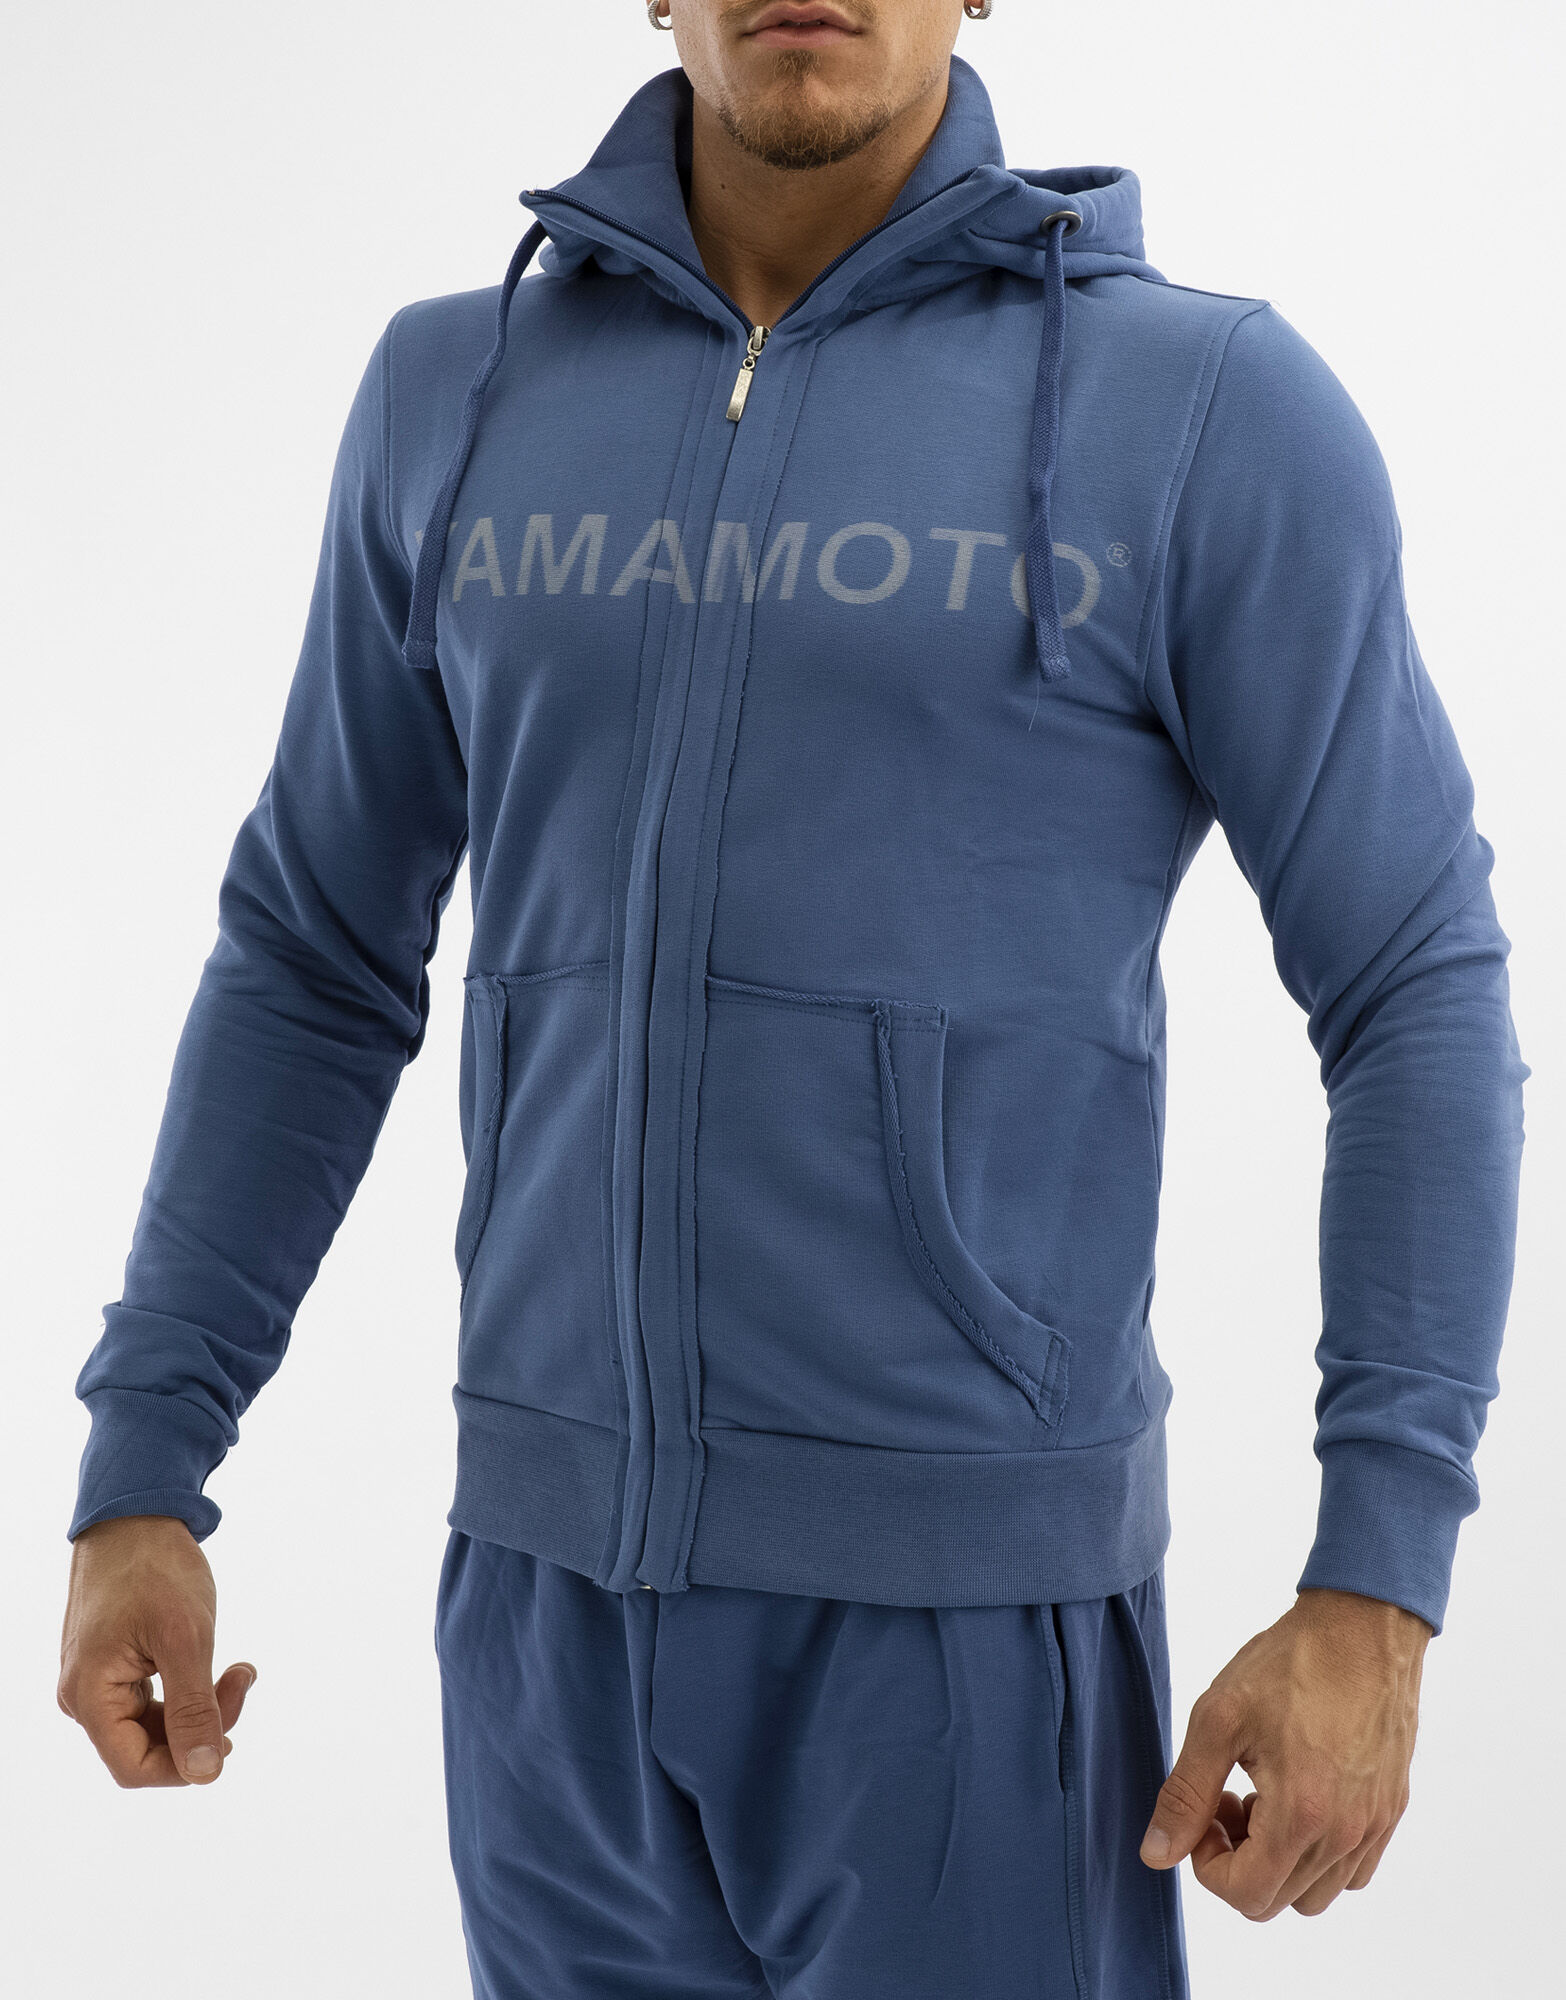 YAMAMOTO OUTFIT Sweatshirt Zip Colore: Navy Xl